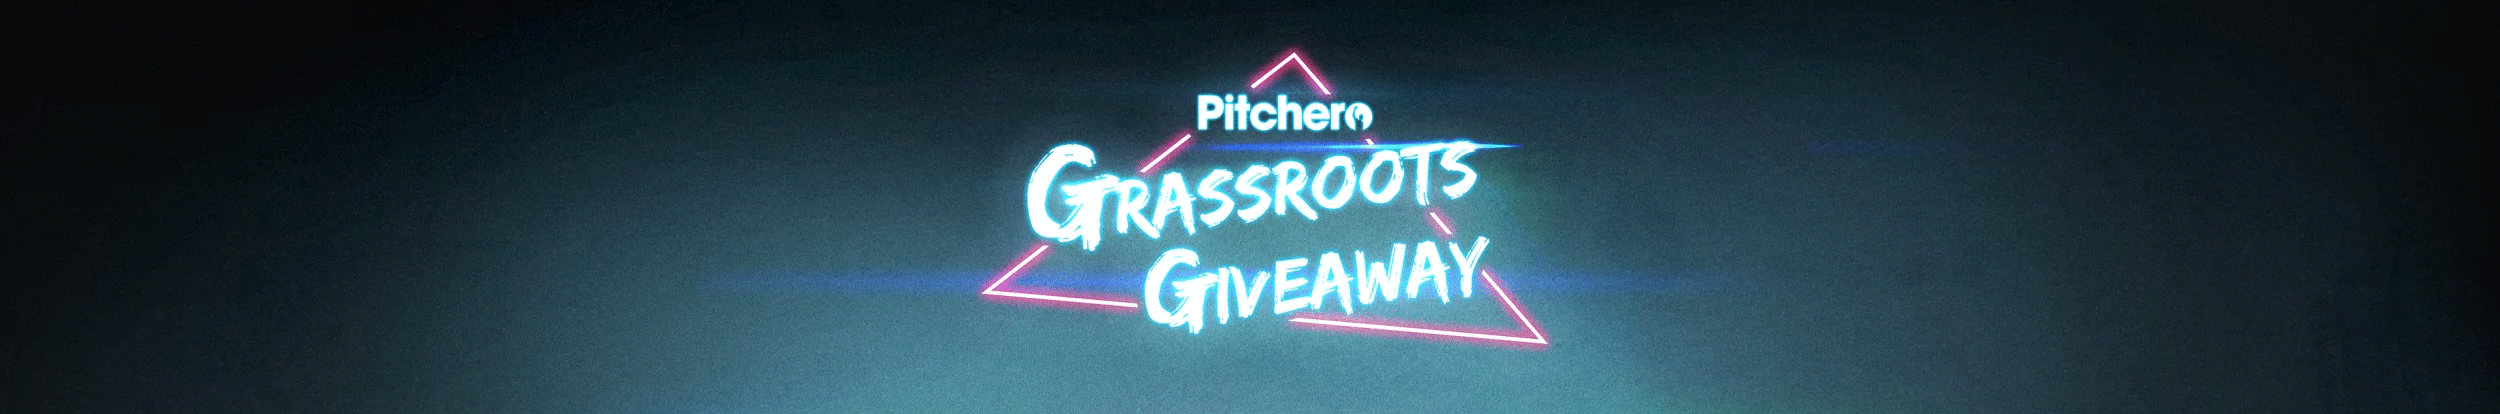 Pitchero Grassroots Giveaway